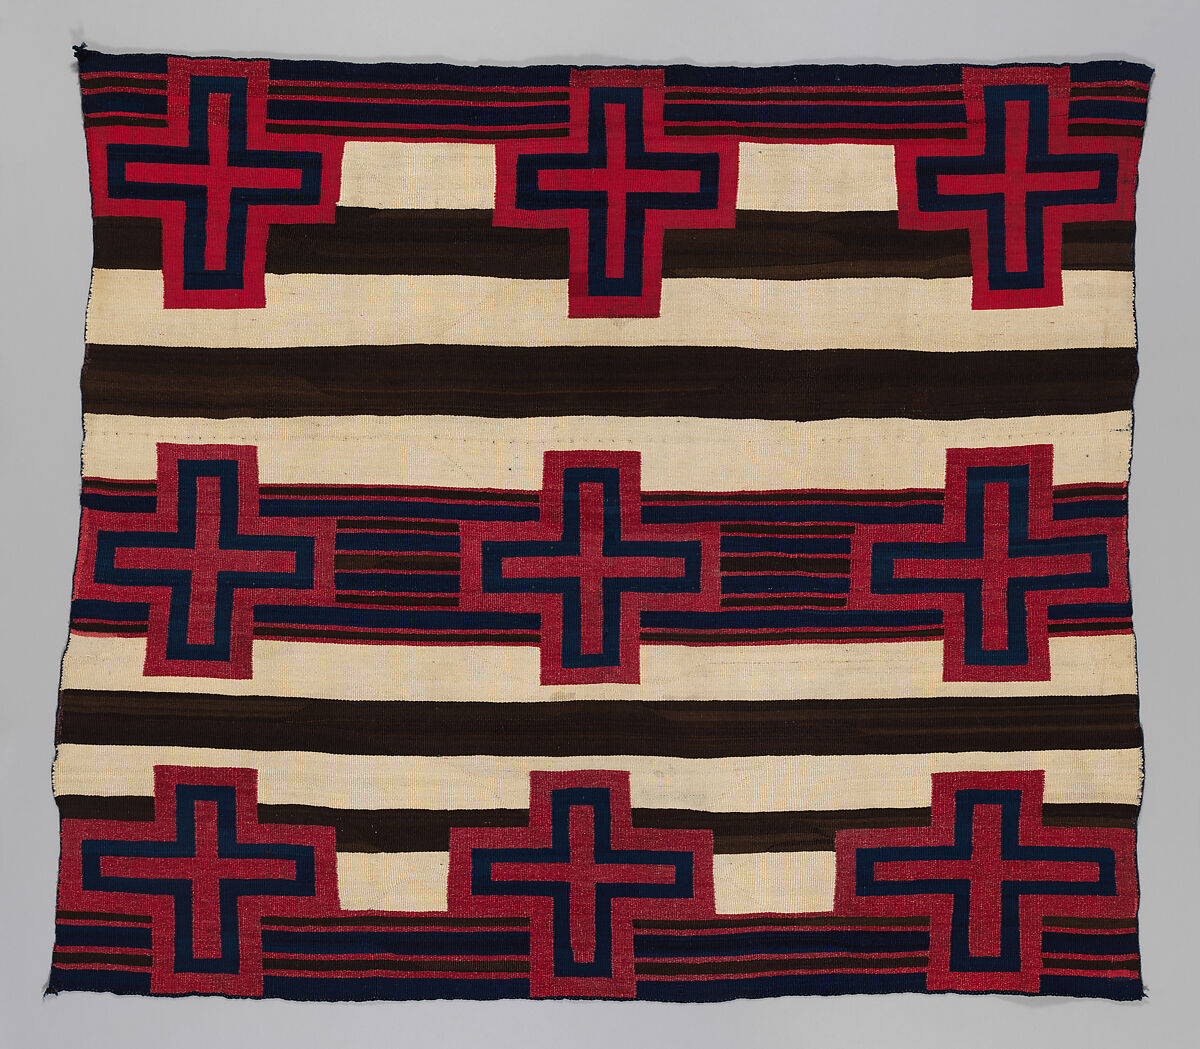 Chief's blanket, Unidentified Navajo Artist, Wool, Diné/Navajo 